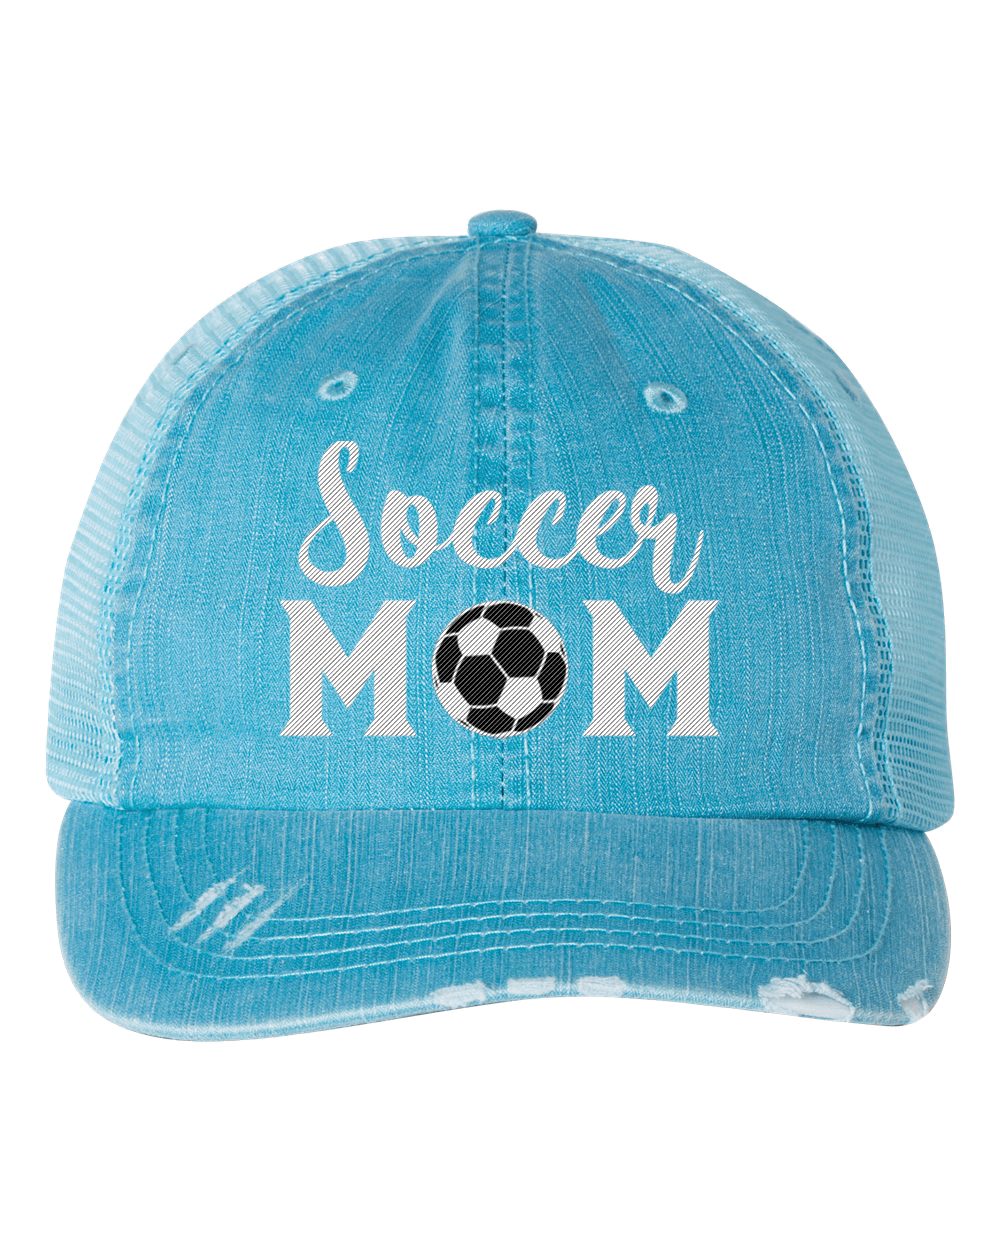 Soccer Mom Unisex Baseball Cap Cotton Denim Fashion Adjustable Sun Hat for Men Women Youth Black 